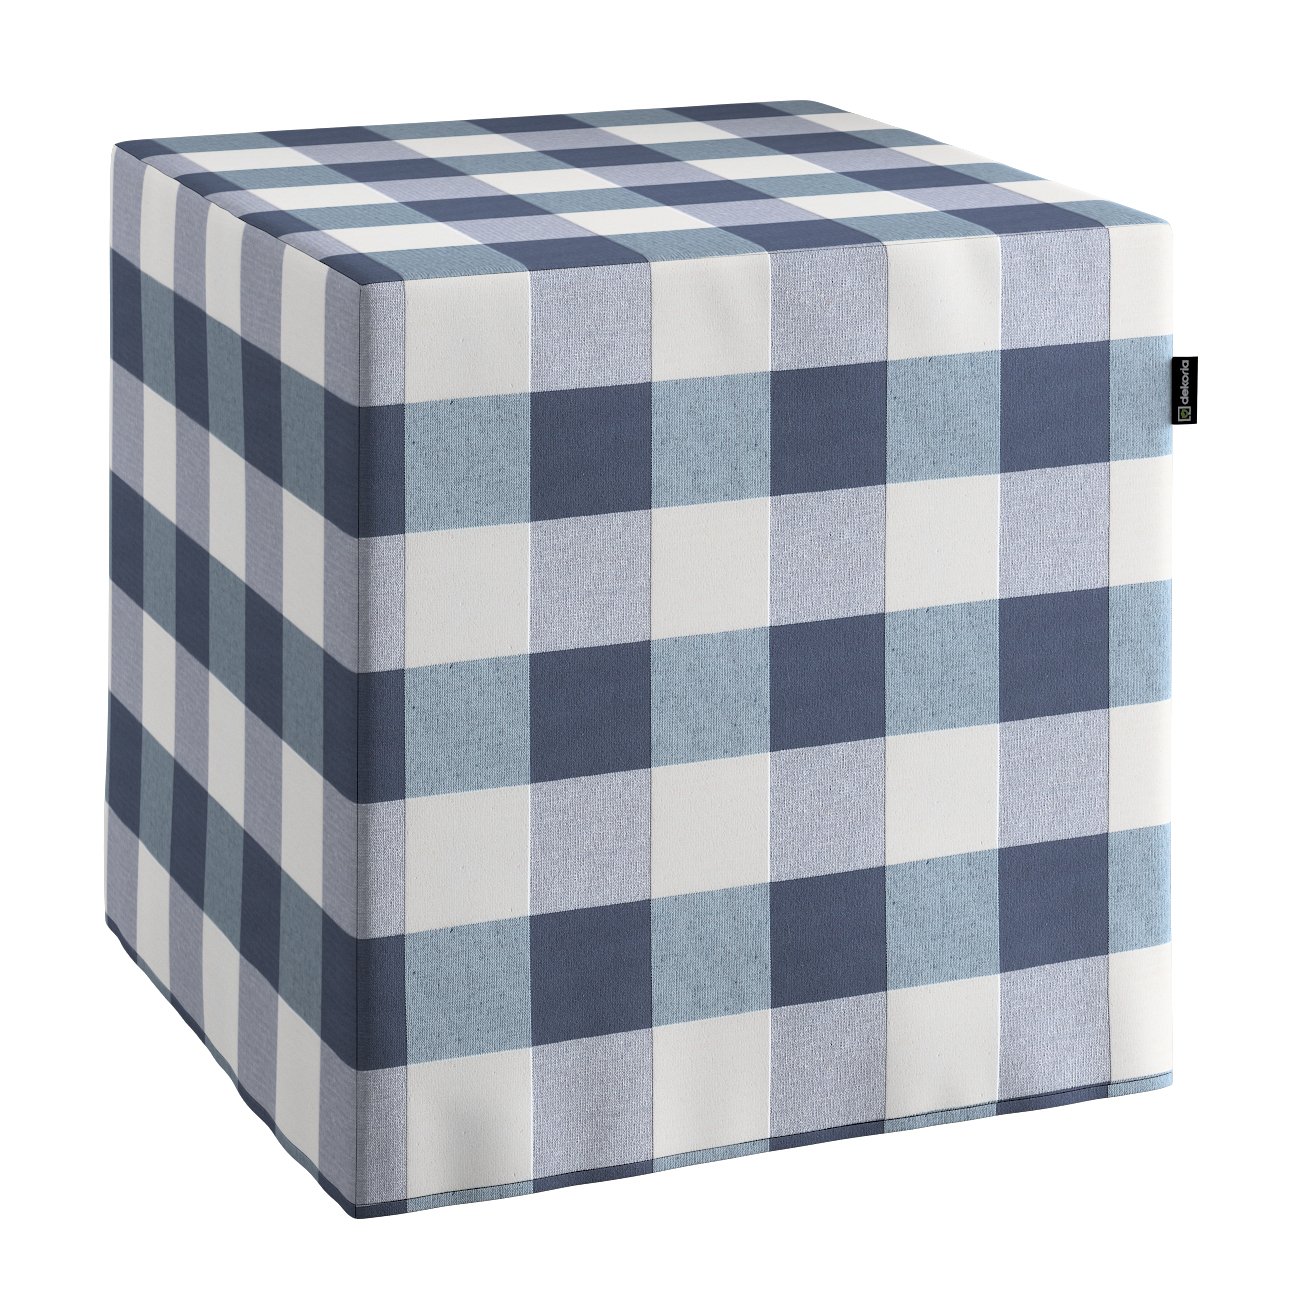 Dekoria Poťah na taburetku,kocka, modro - biele veľké káro, 40 x 40 x 40 cm, Quadro, 136-03